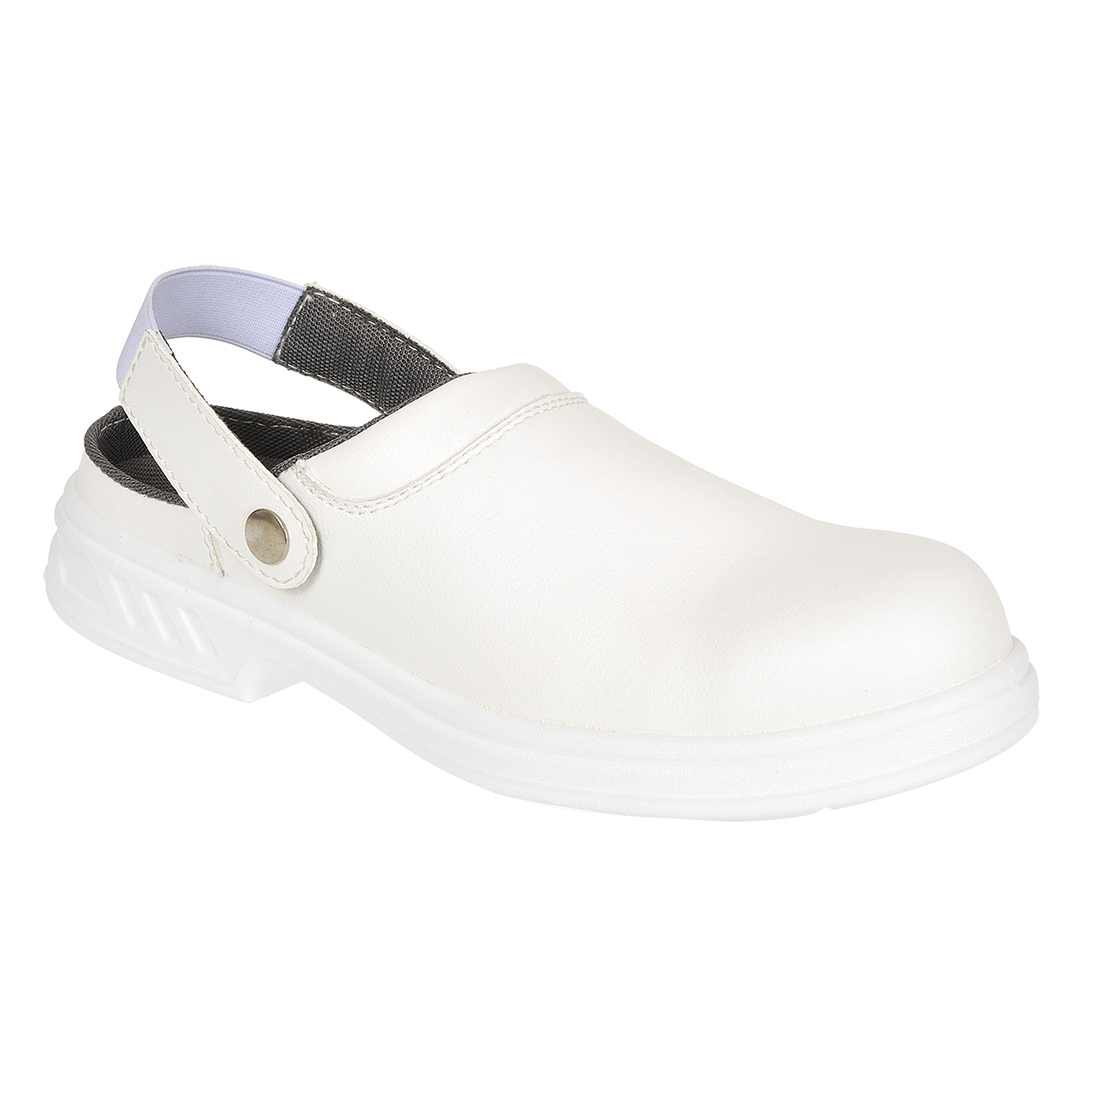 Pracovní sandál Steelite Safety Clog SB AE WRU Barva: bílá, Velikost: 41